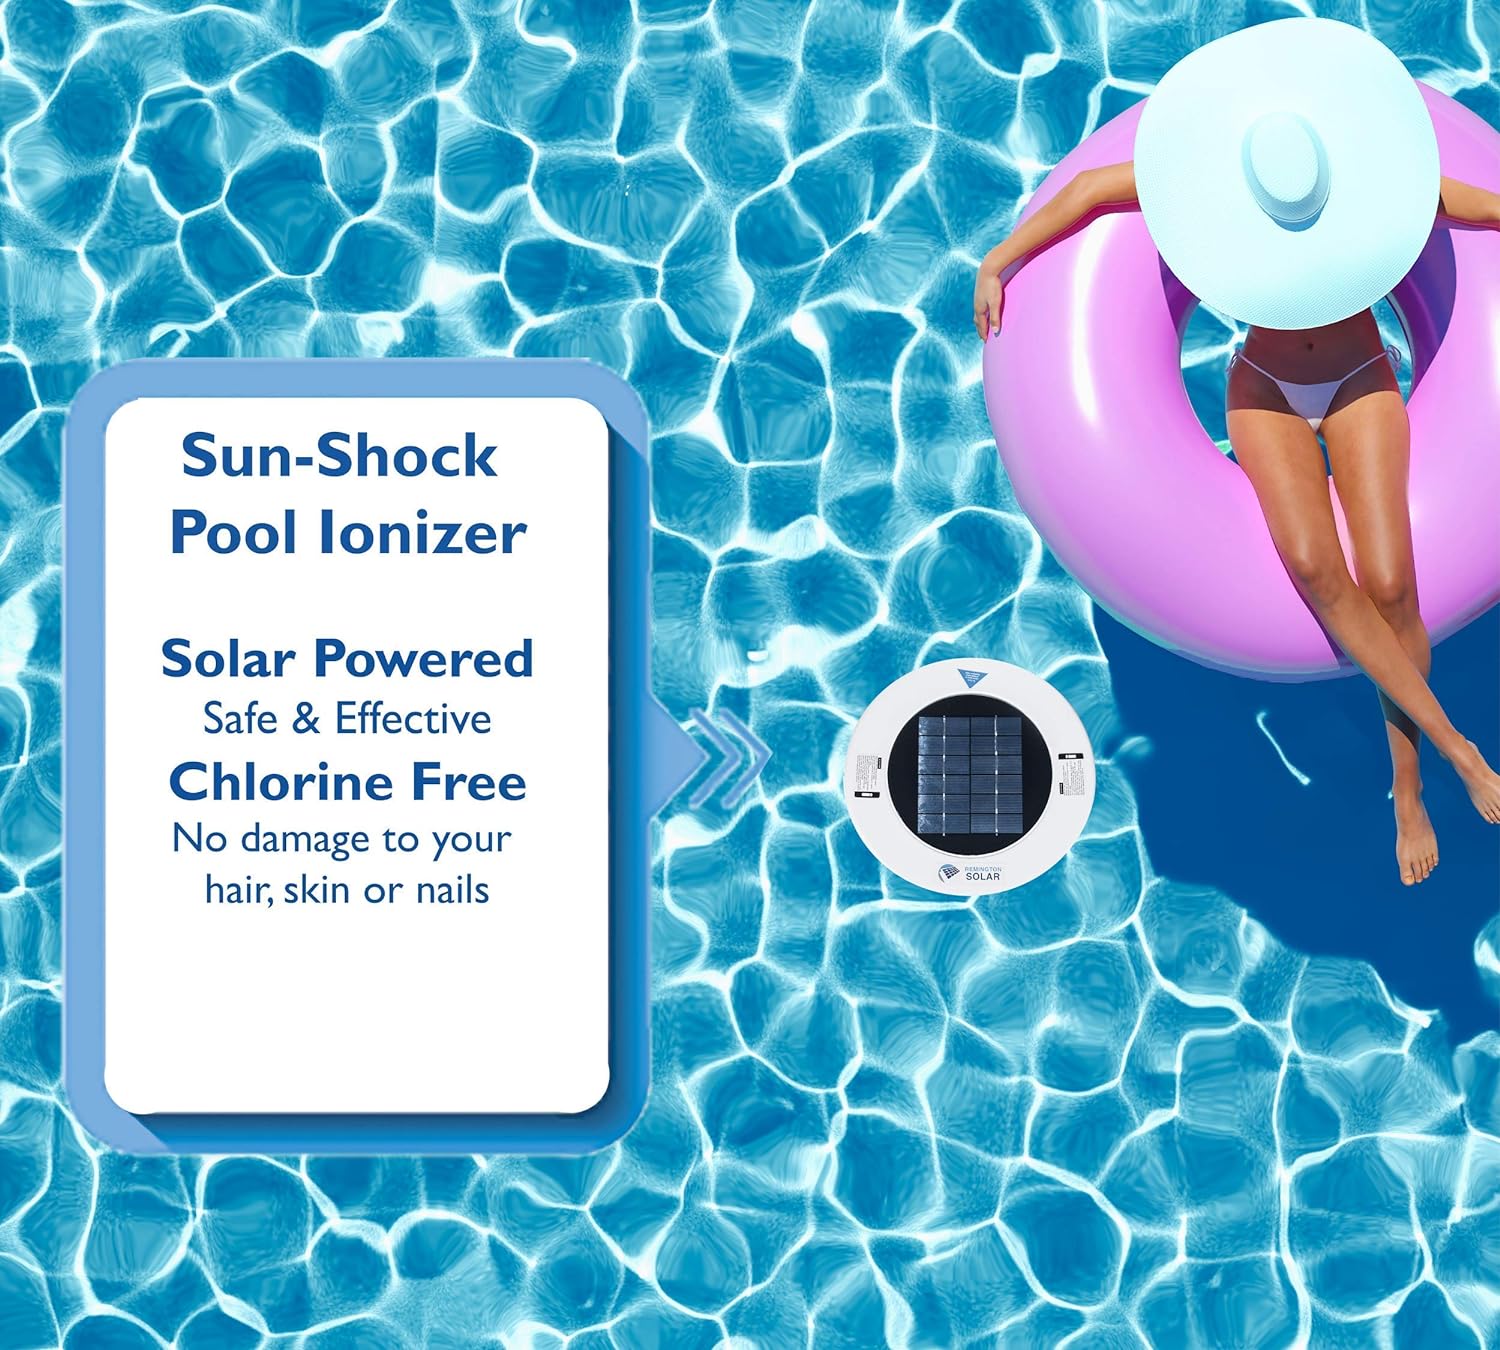 Remington Solar Chlorine Free Sun Shock & Water Purifier Ionizer